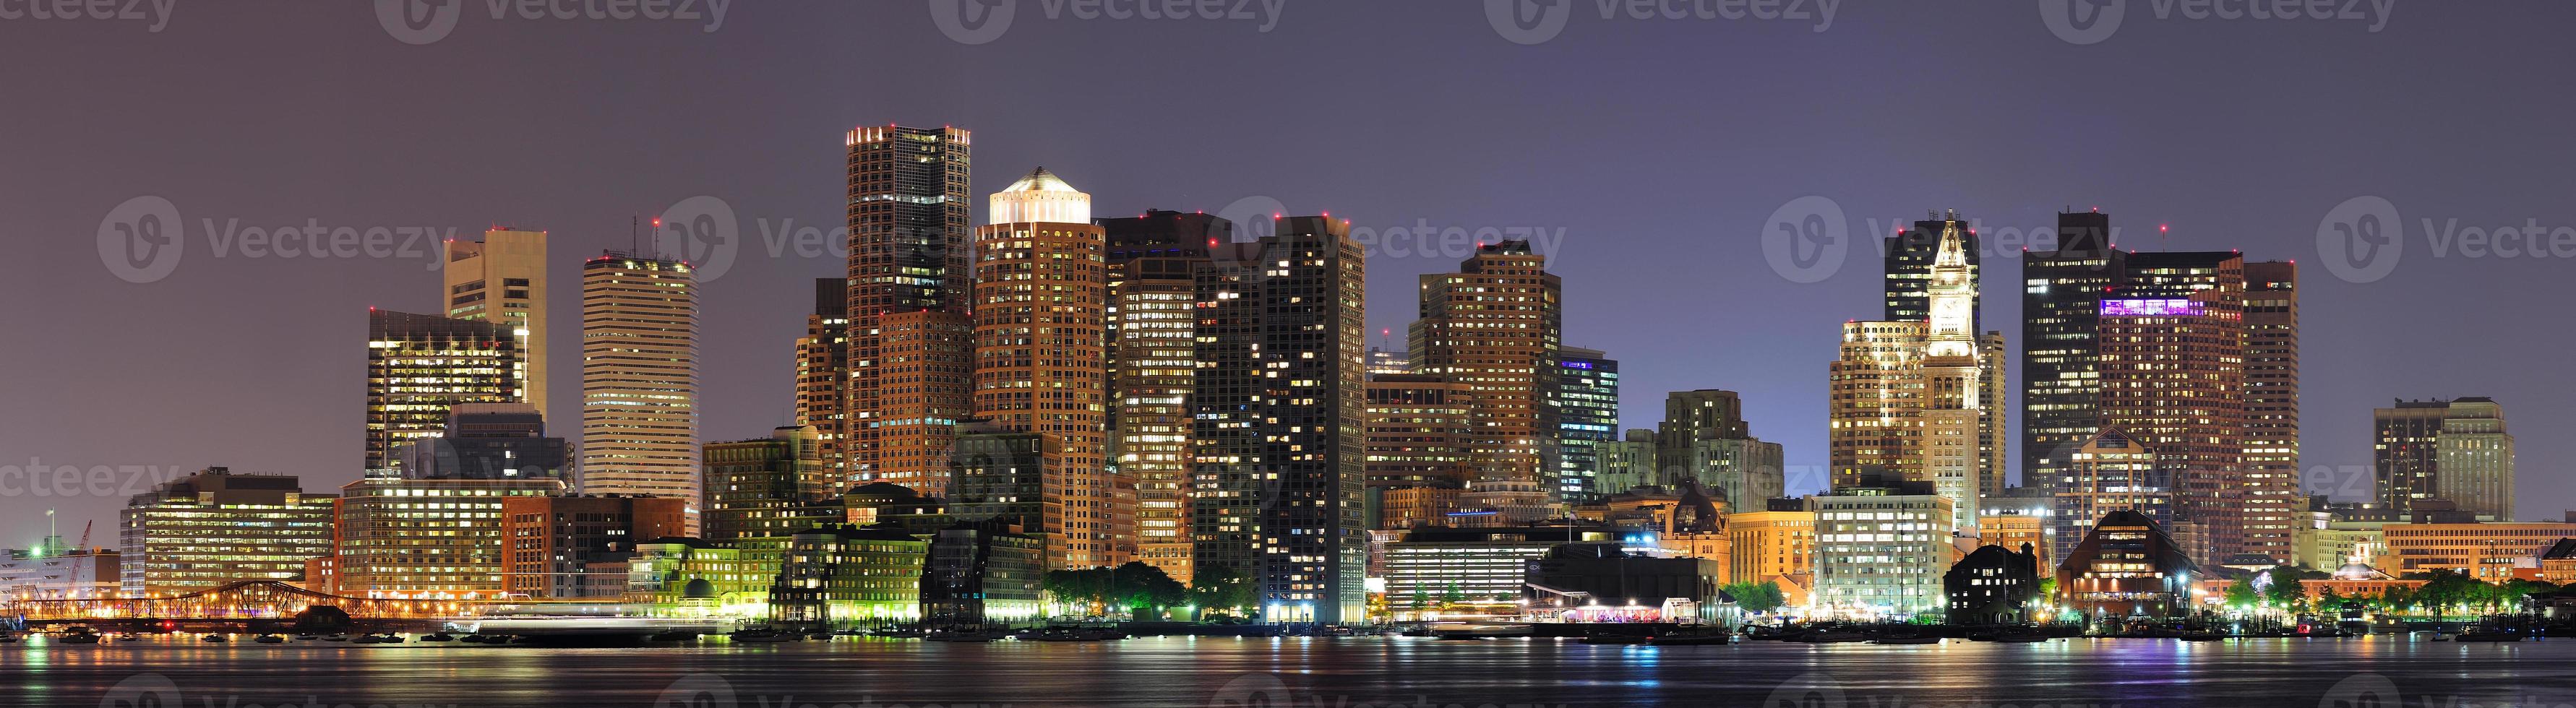 boston nacht panorama foto